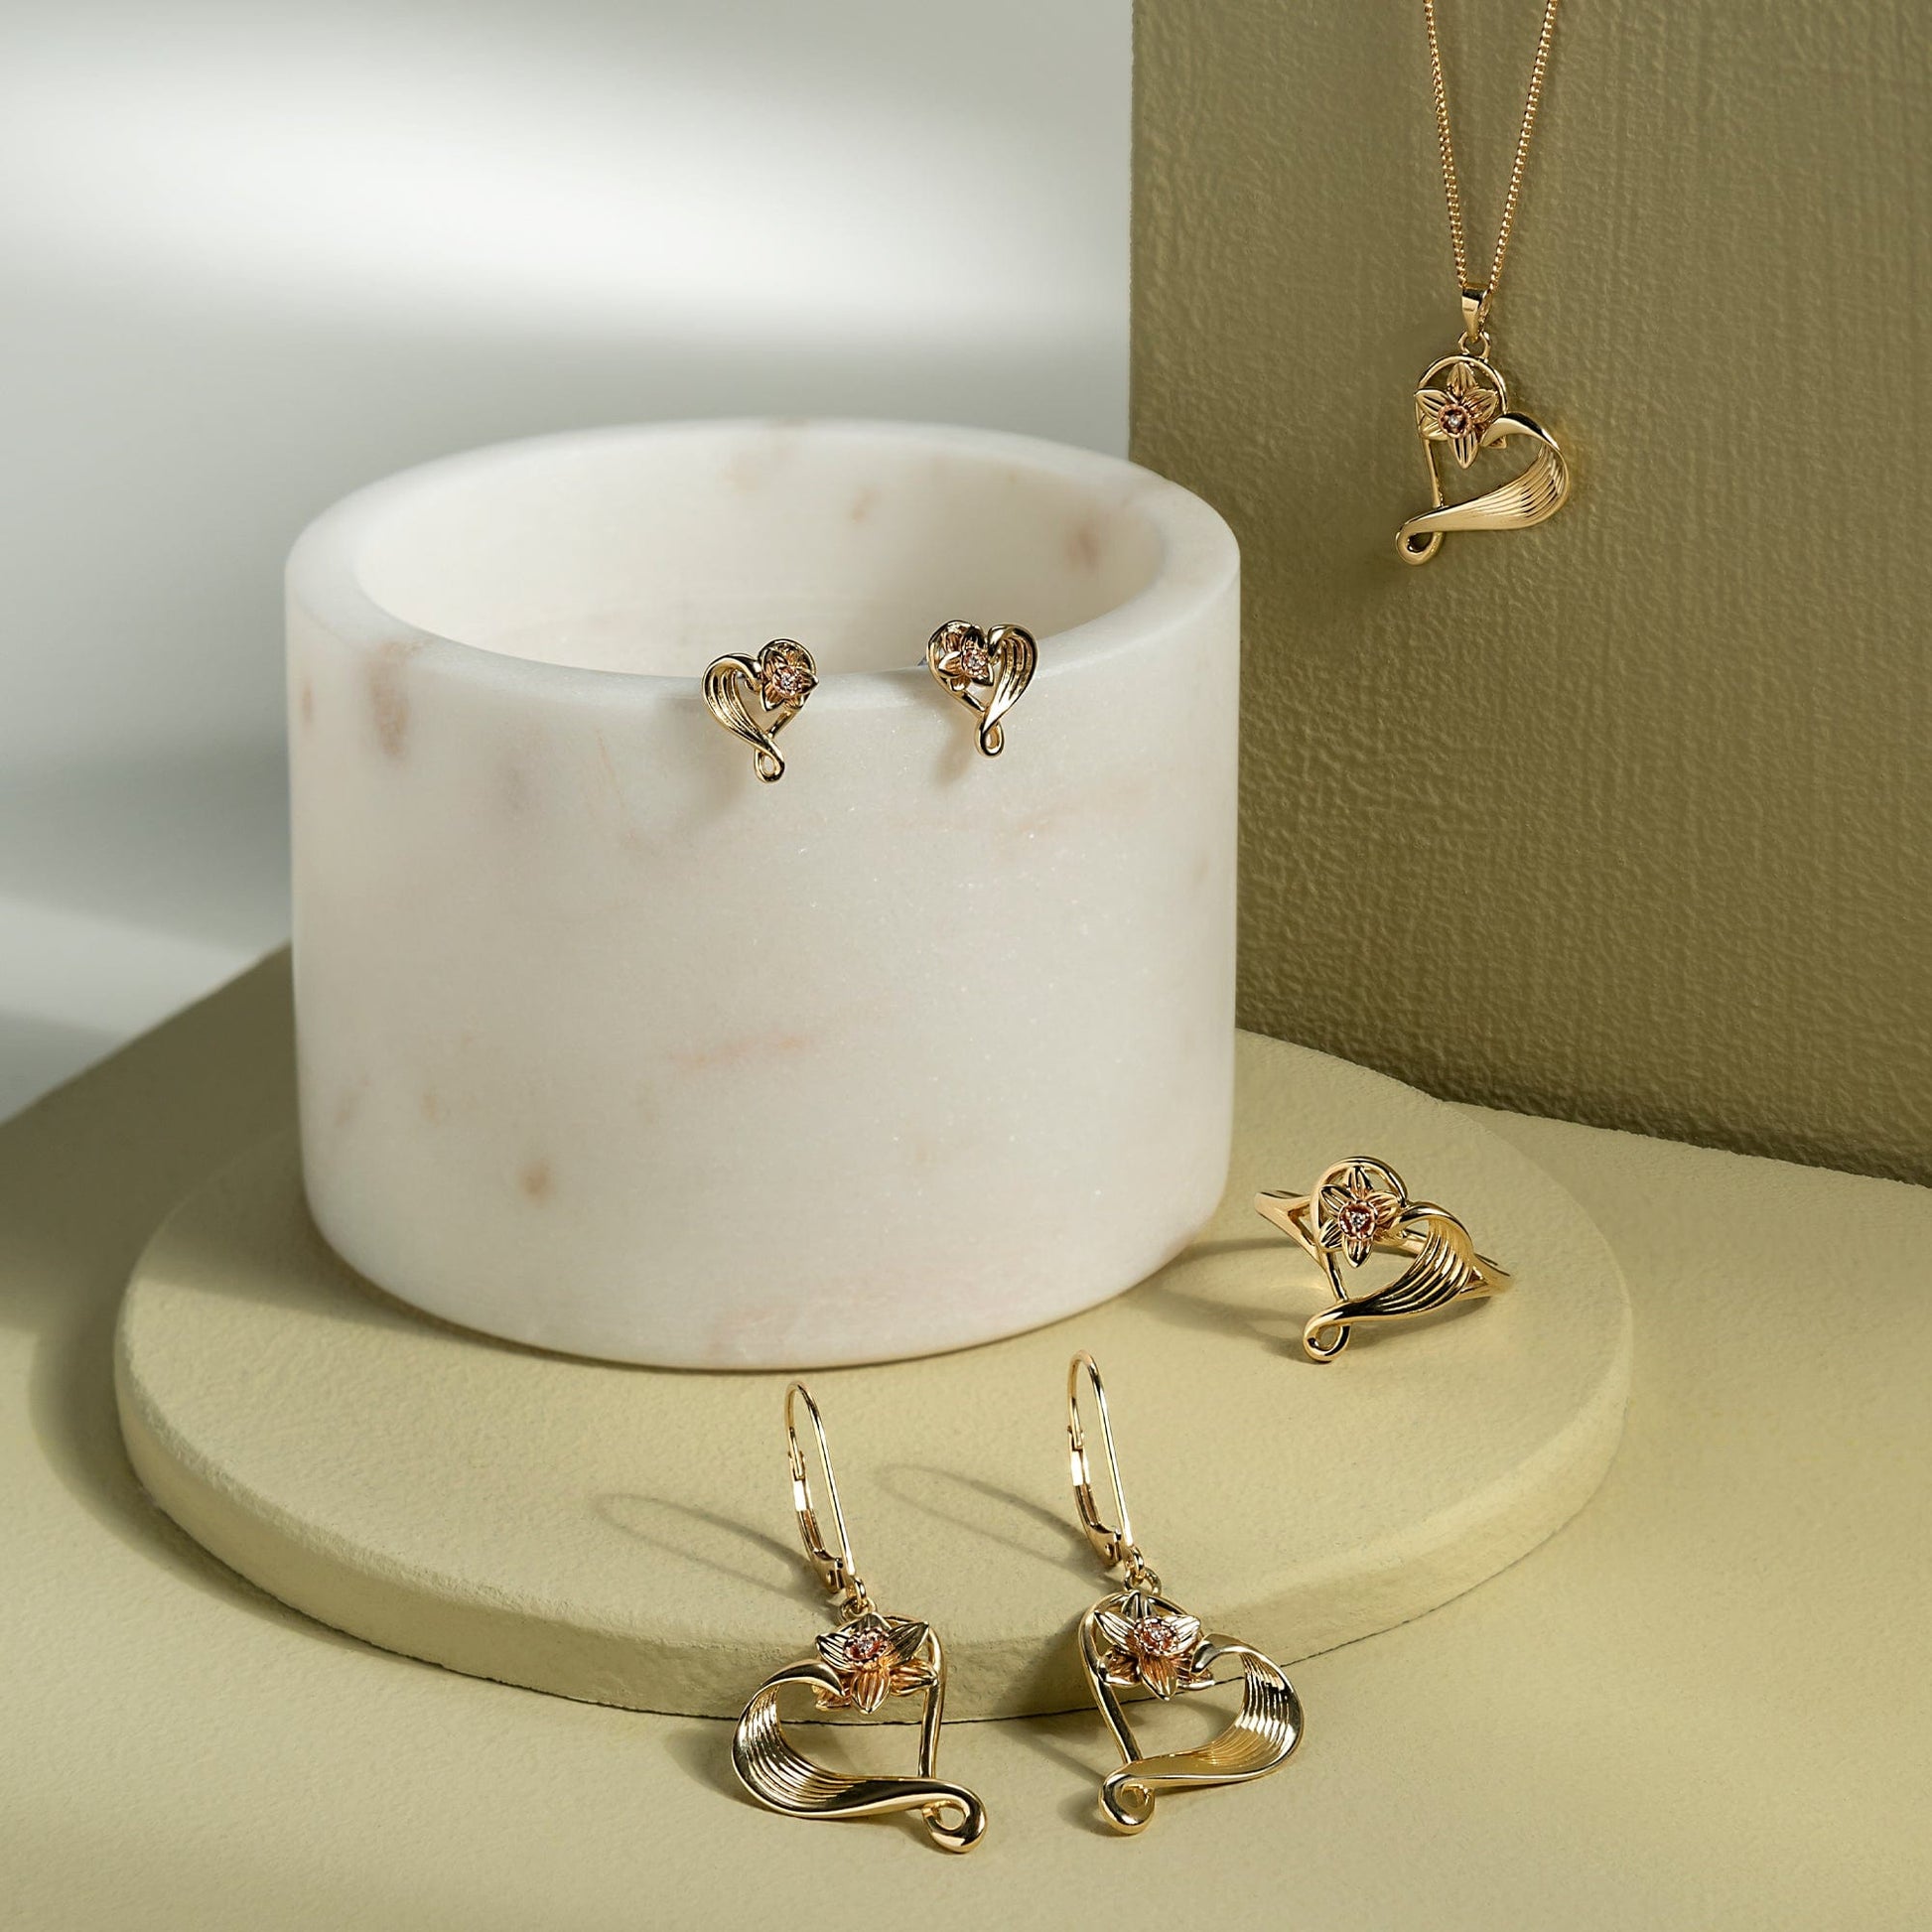 St David's Daffodil Gold and Diamond Stud Earrings